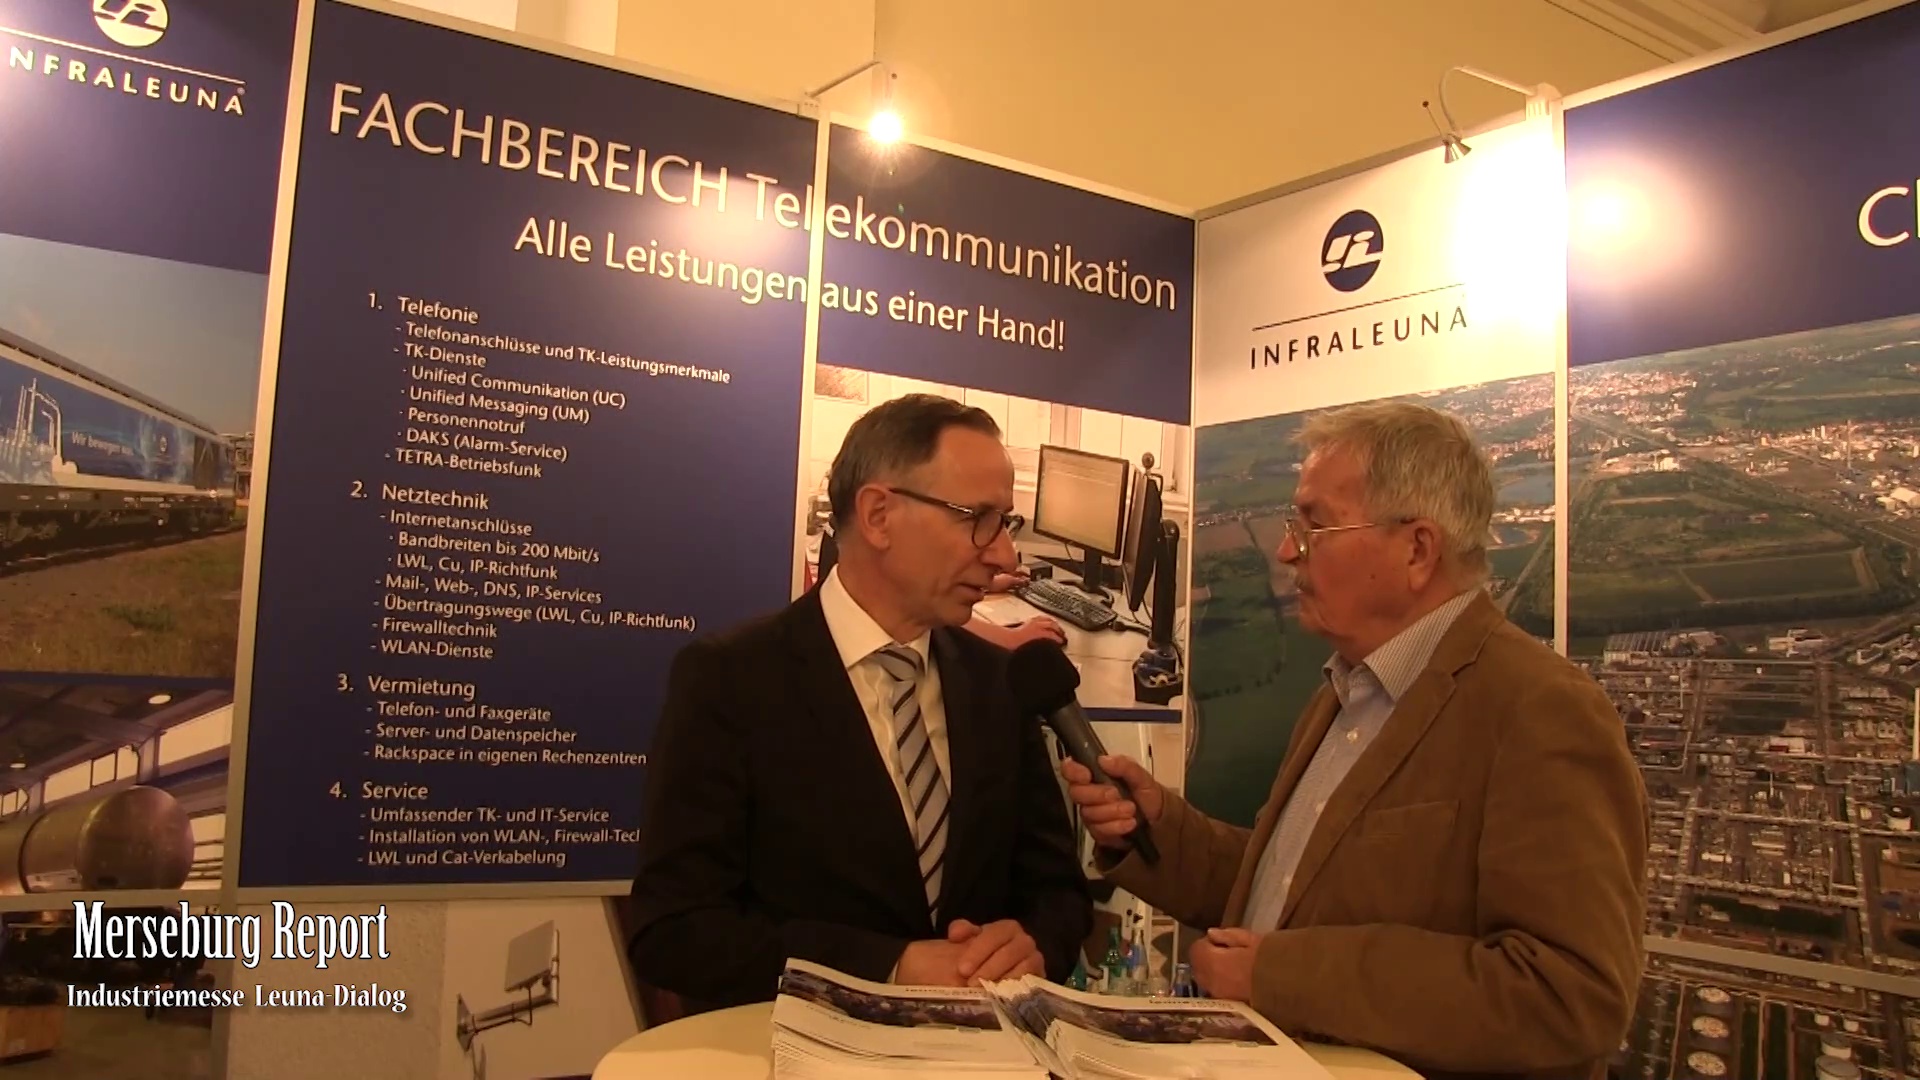 Merseburg Report: Industriemesse Leuna - Dialog